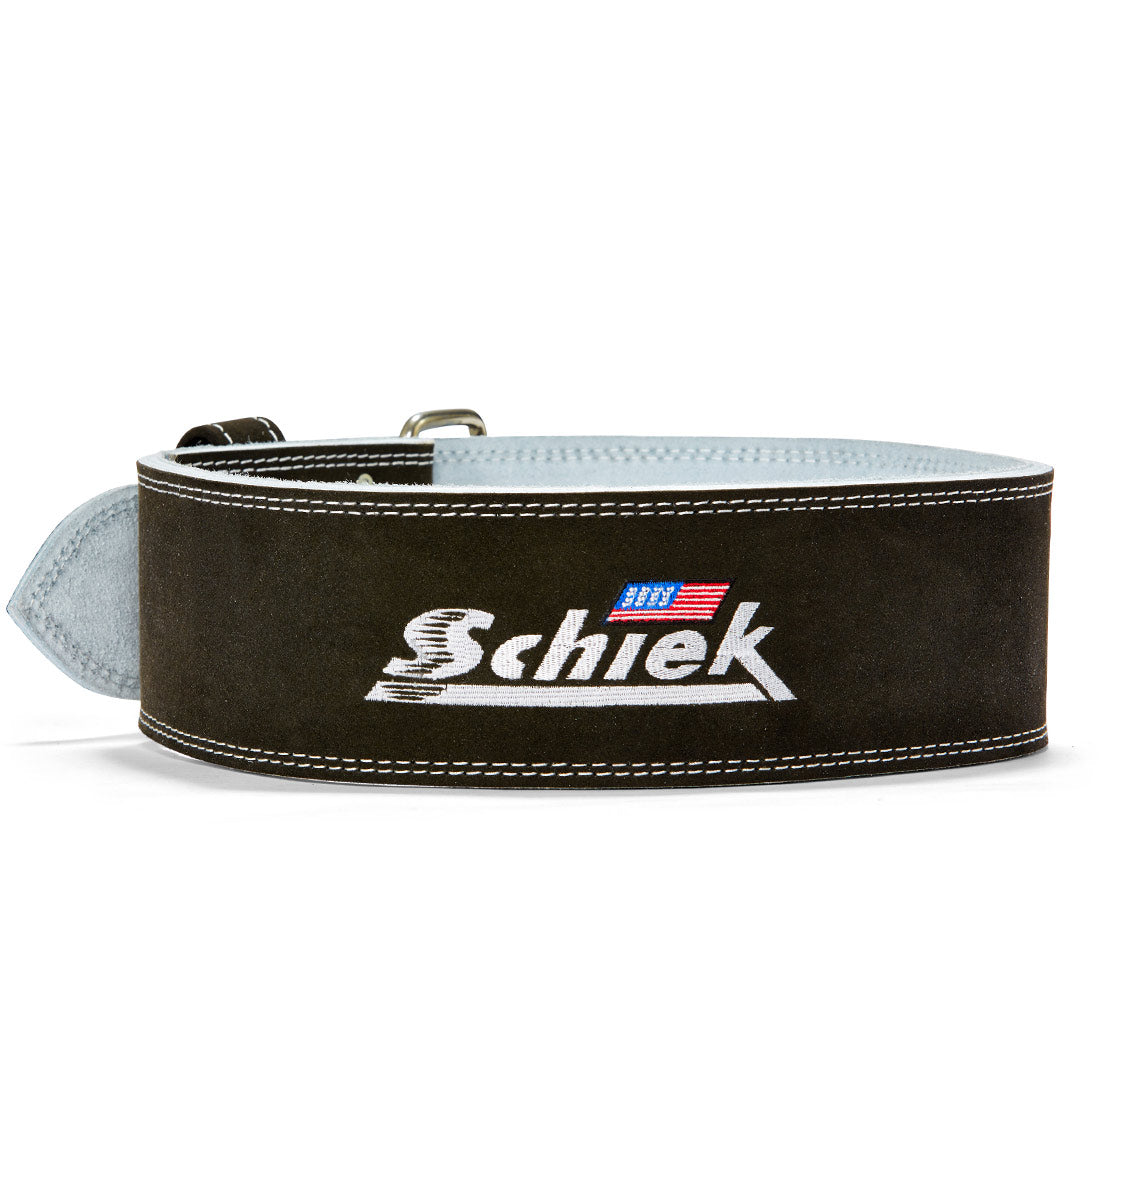 Schiek 10cm DBL Prong Competition Power Belt